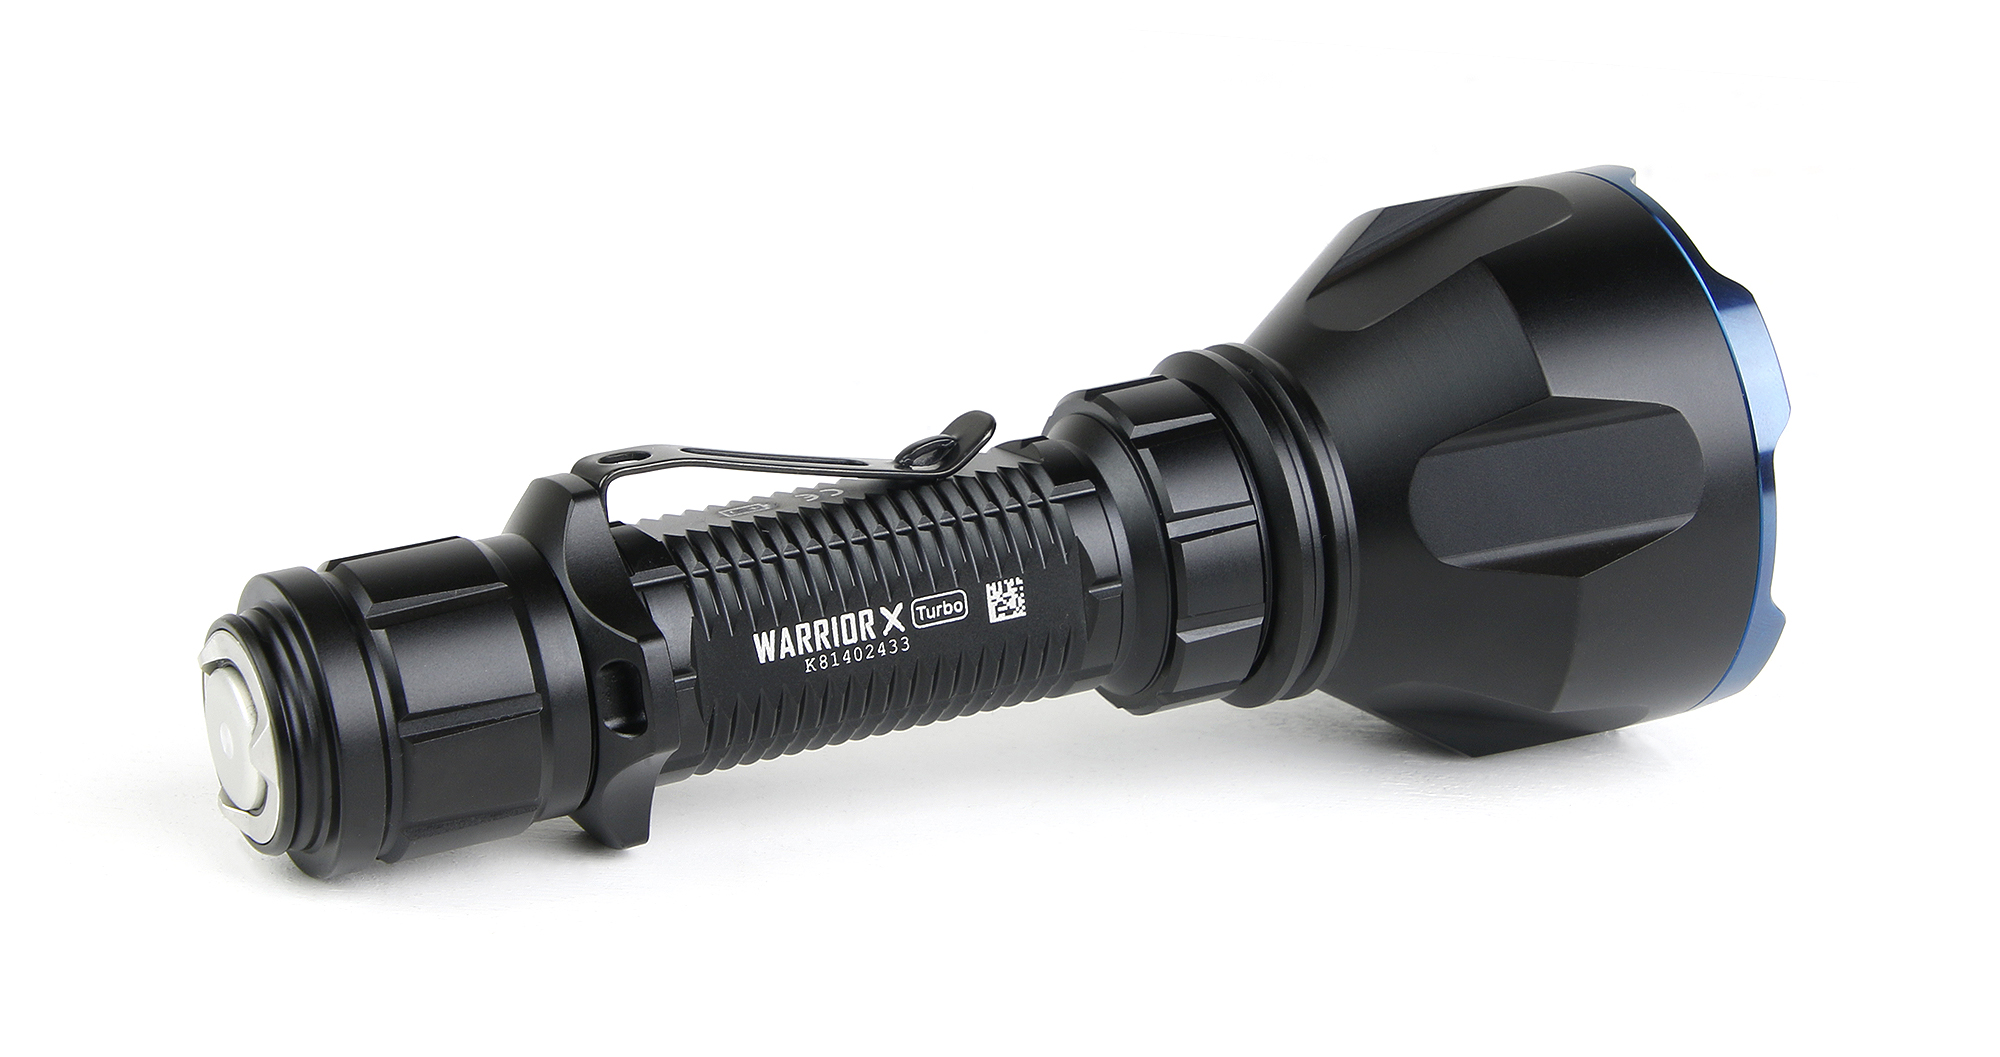 Kit de Caza Olight Linterna Warrior X Turbo LED 1100 Lúmenes, Comprar  online